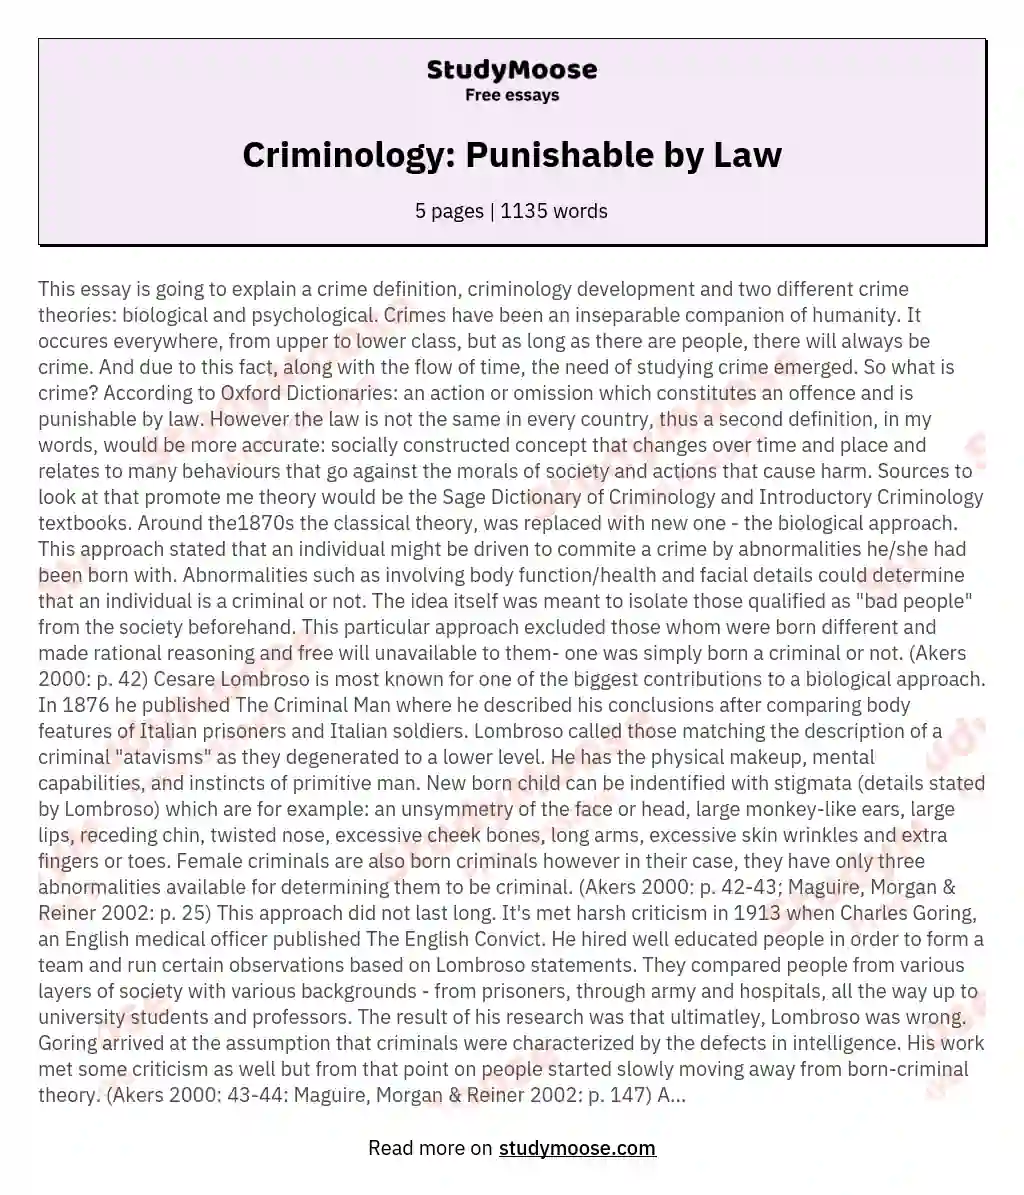 Criminology: Punishable by Law essay